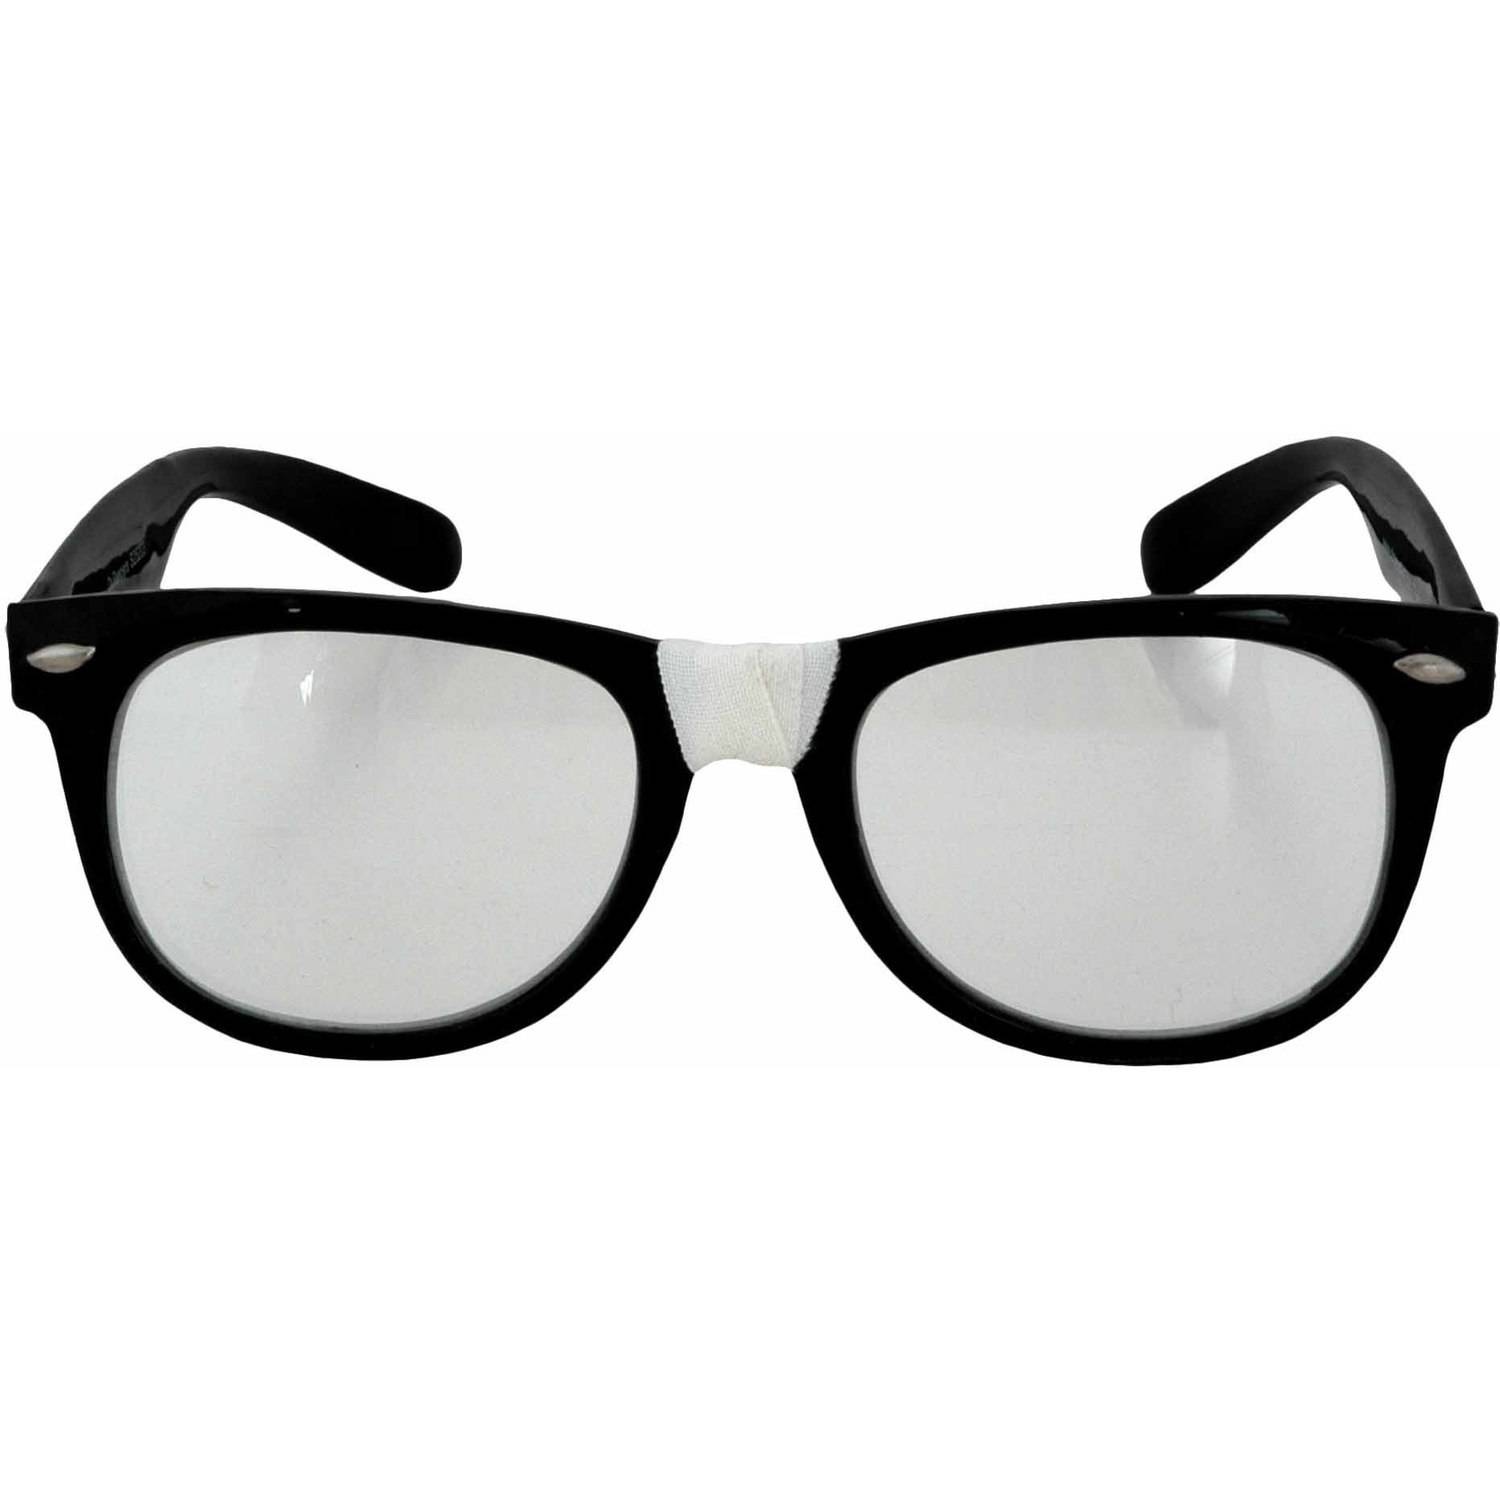 Adult Round Black Eye Glasses Eyes Nerd Nerdy Geek Costume Harry Brainy Pot...